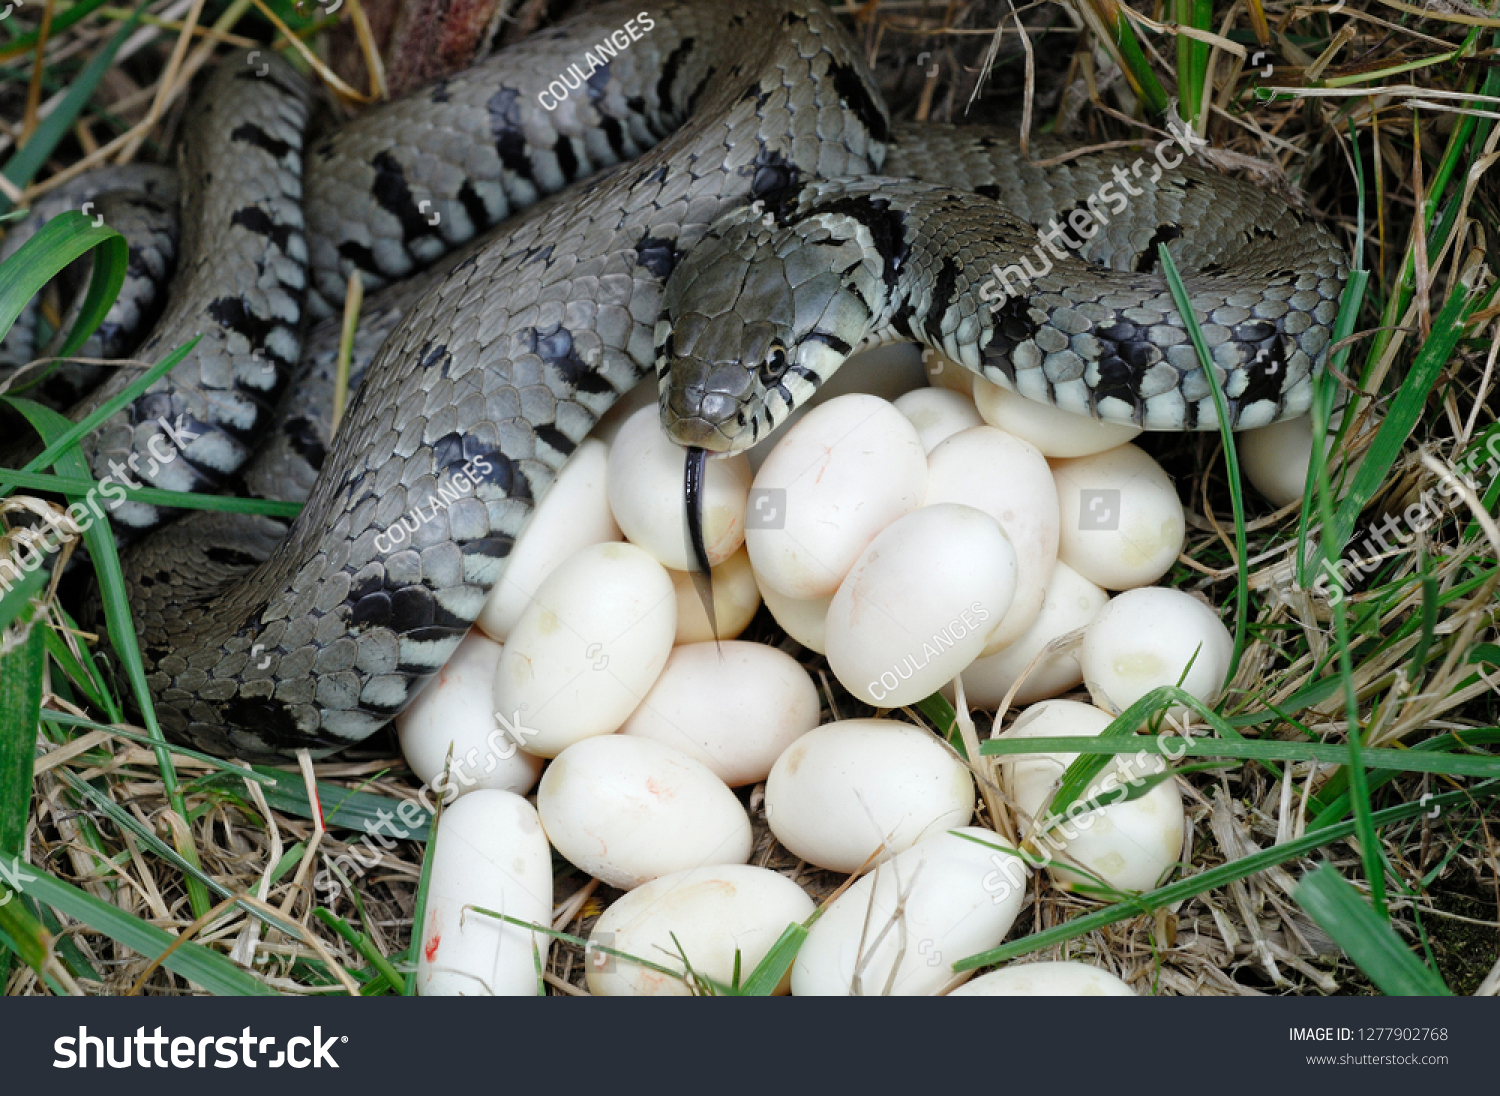 яйца змей фото и размер